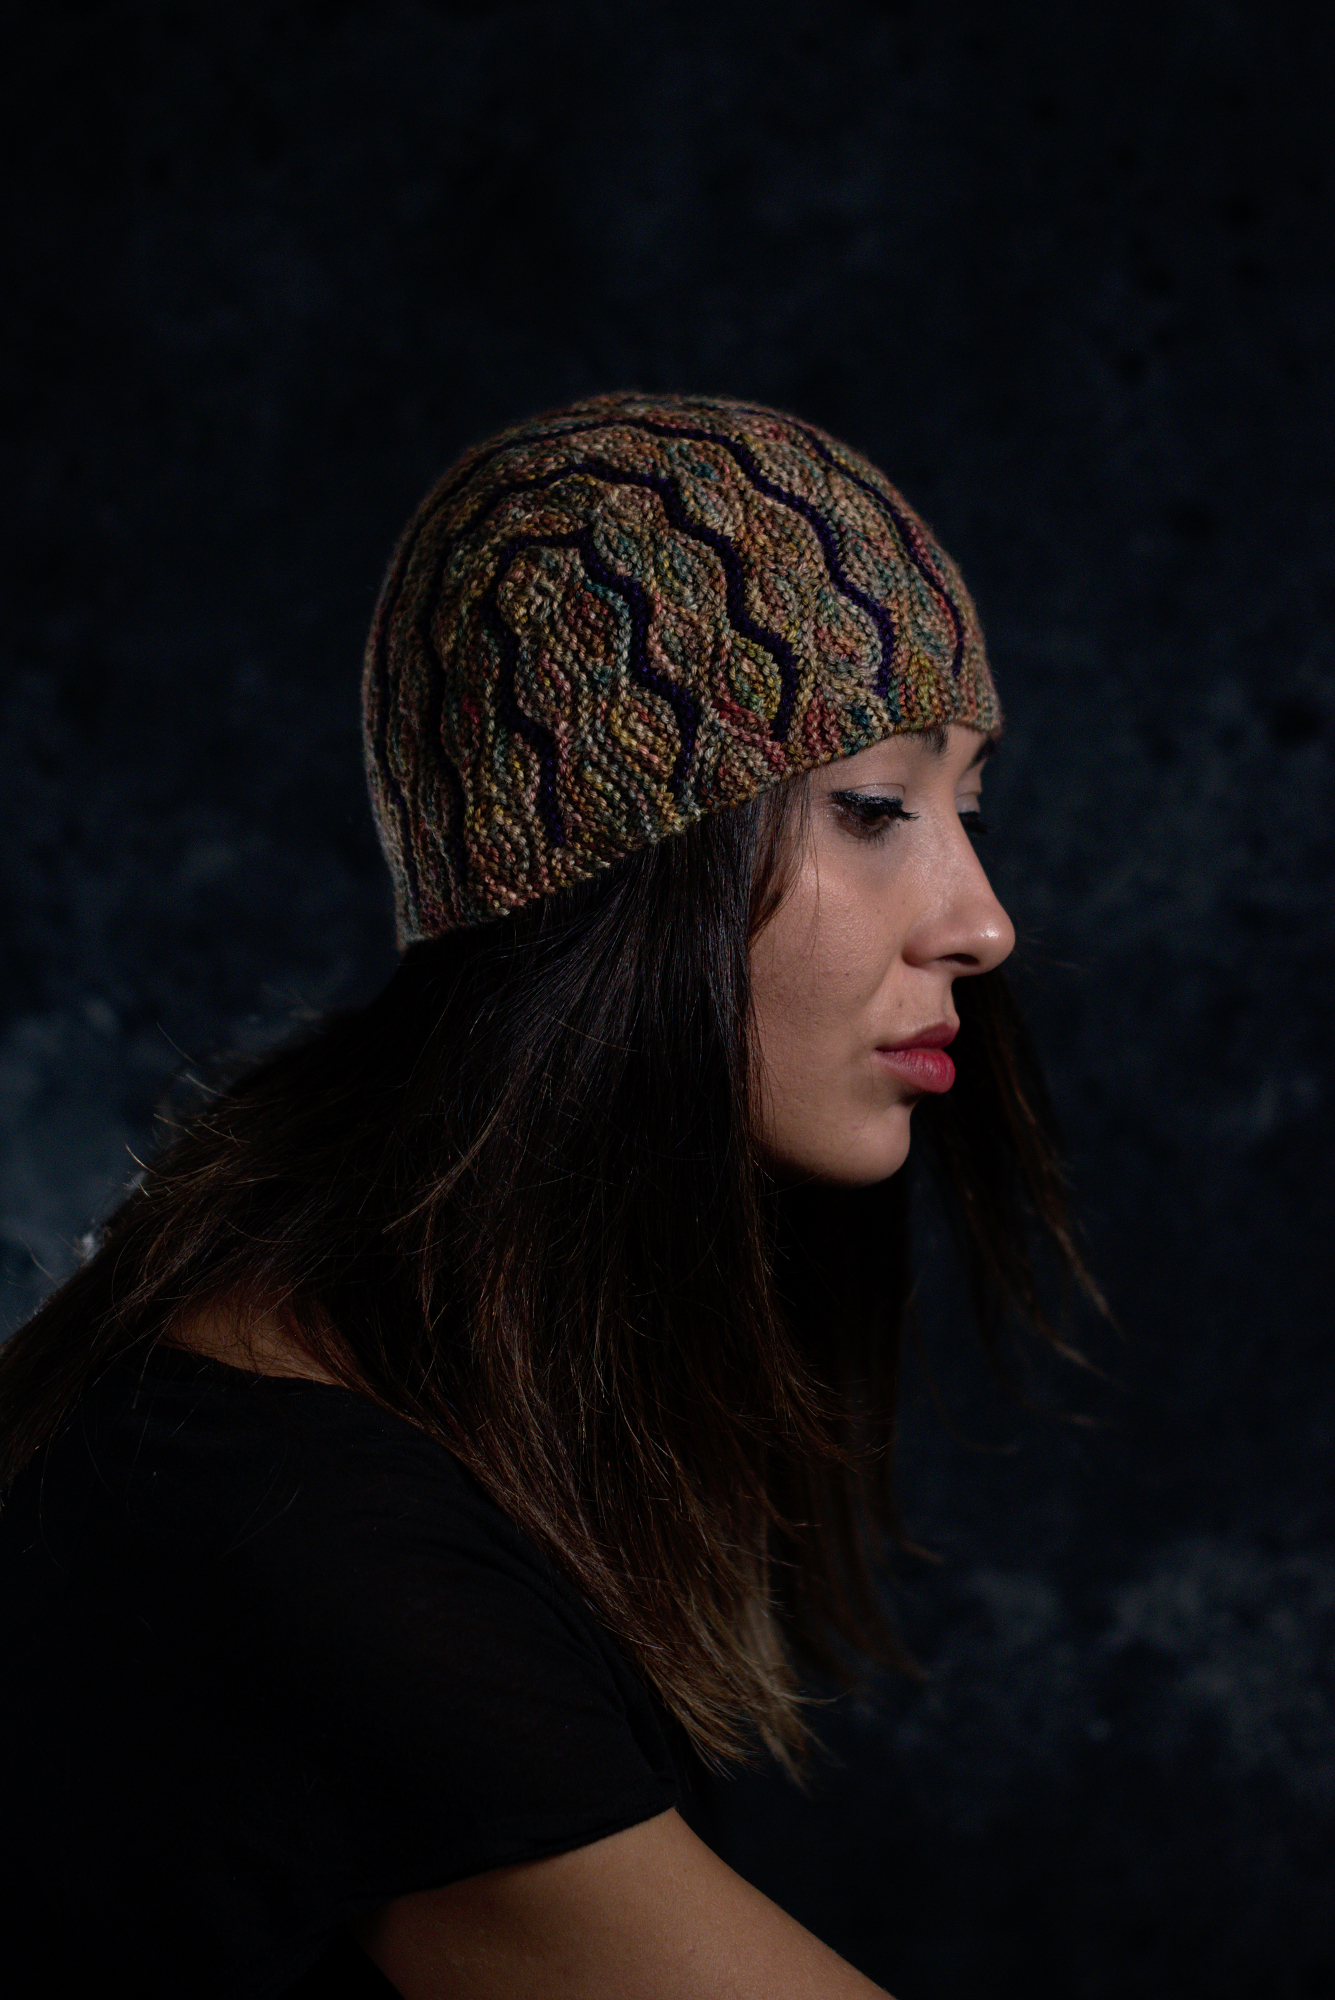 Undulous sideways knit short row striped hat knitting pattern